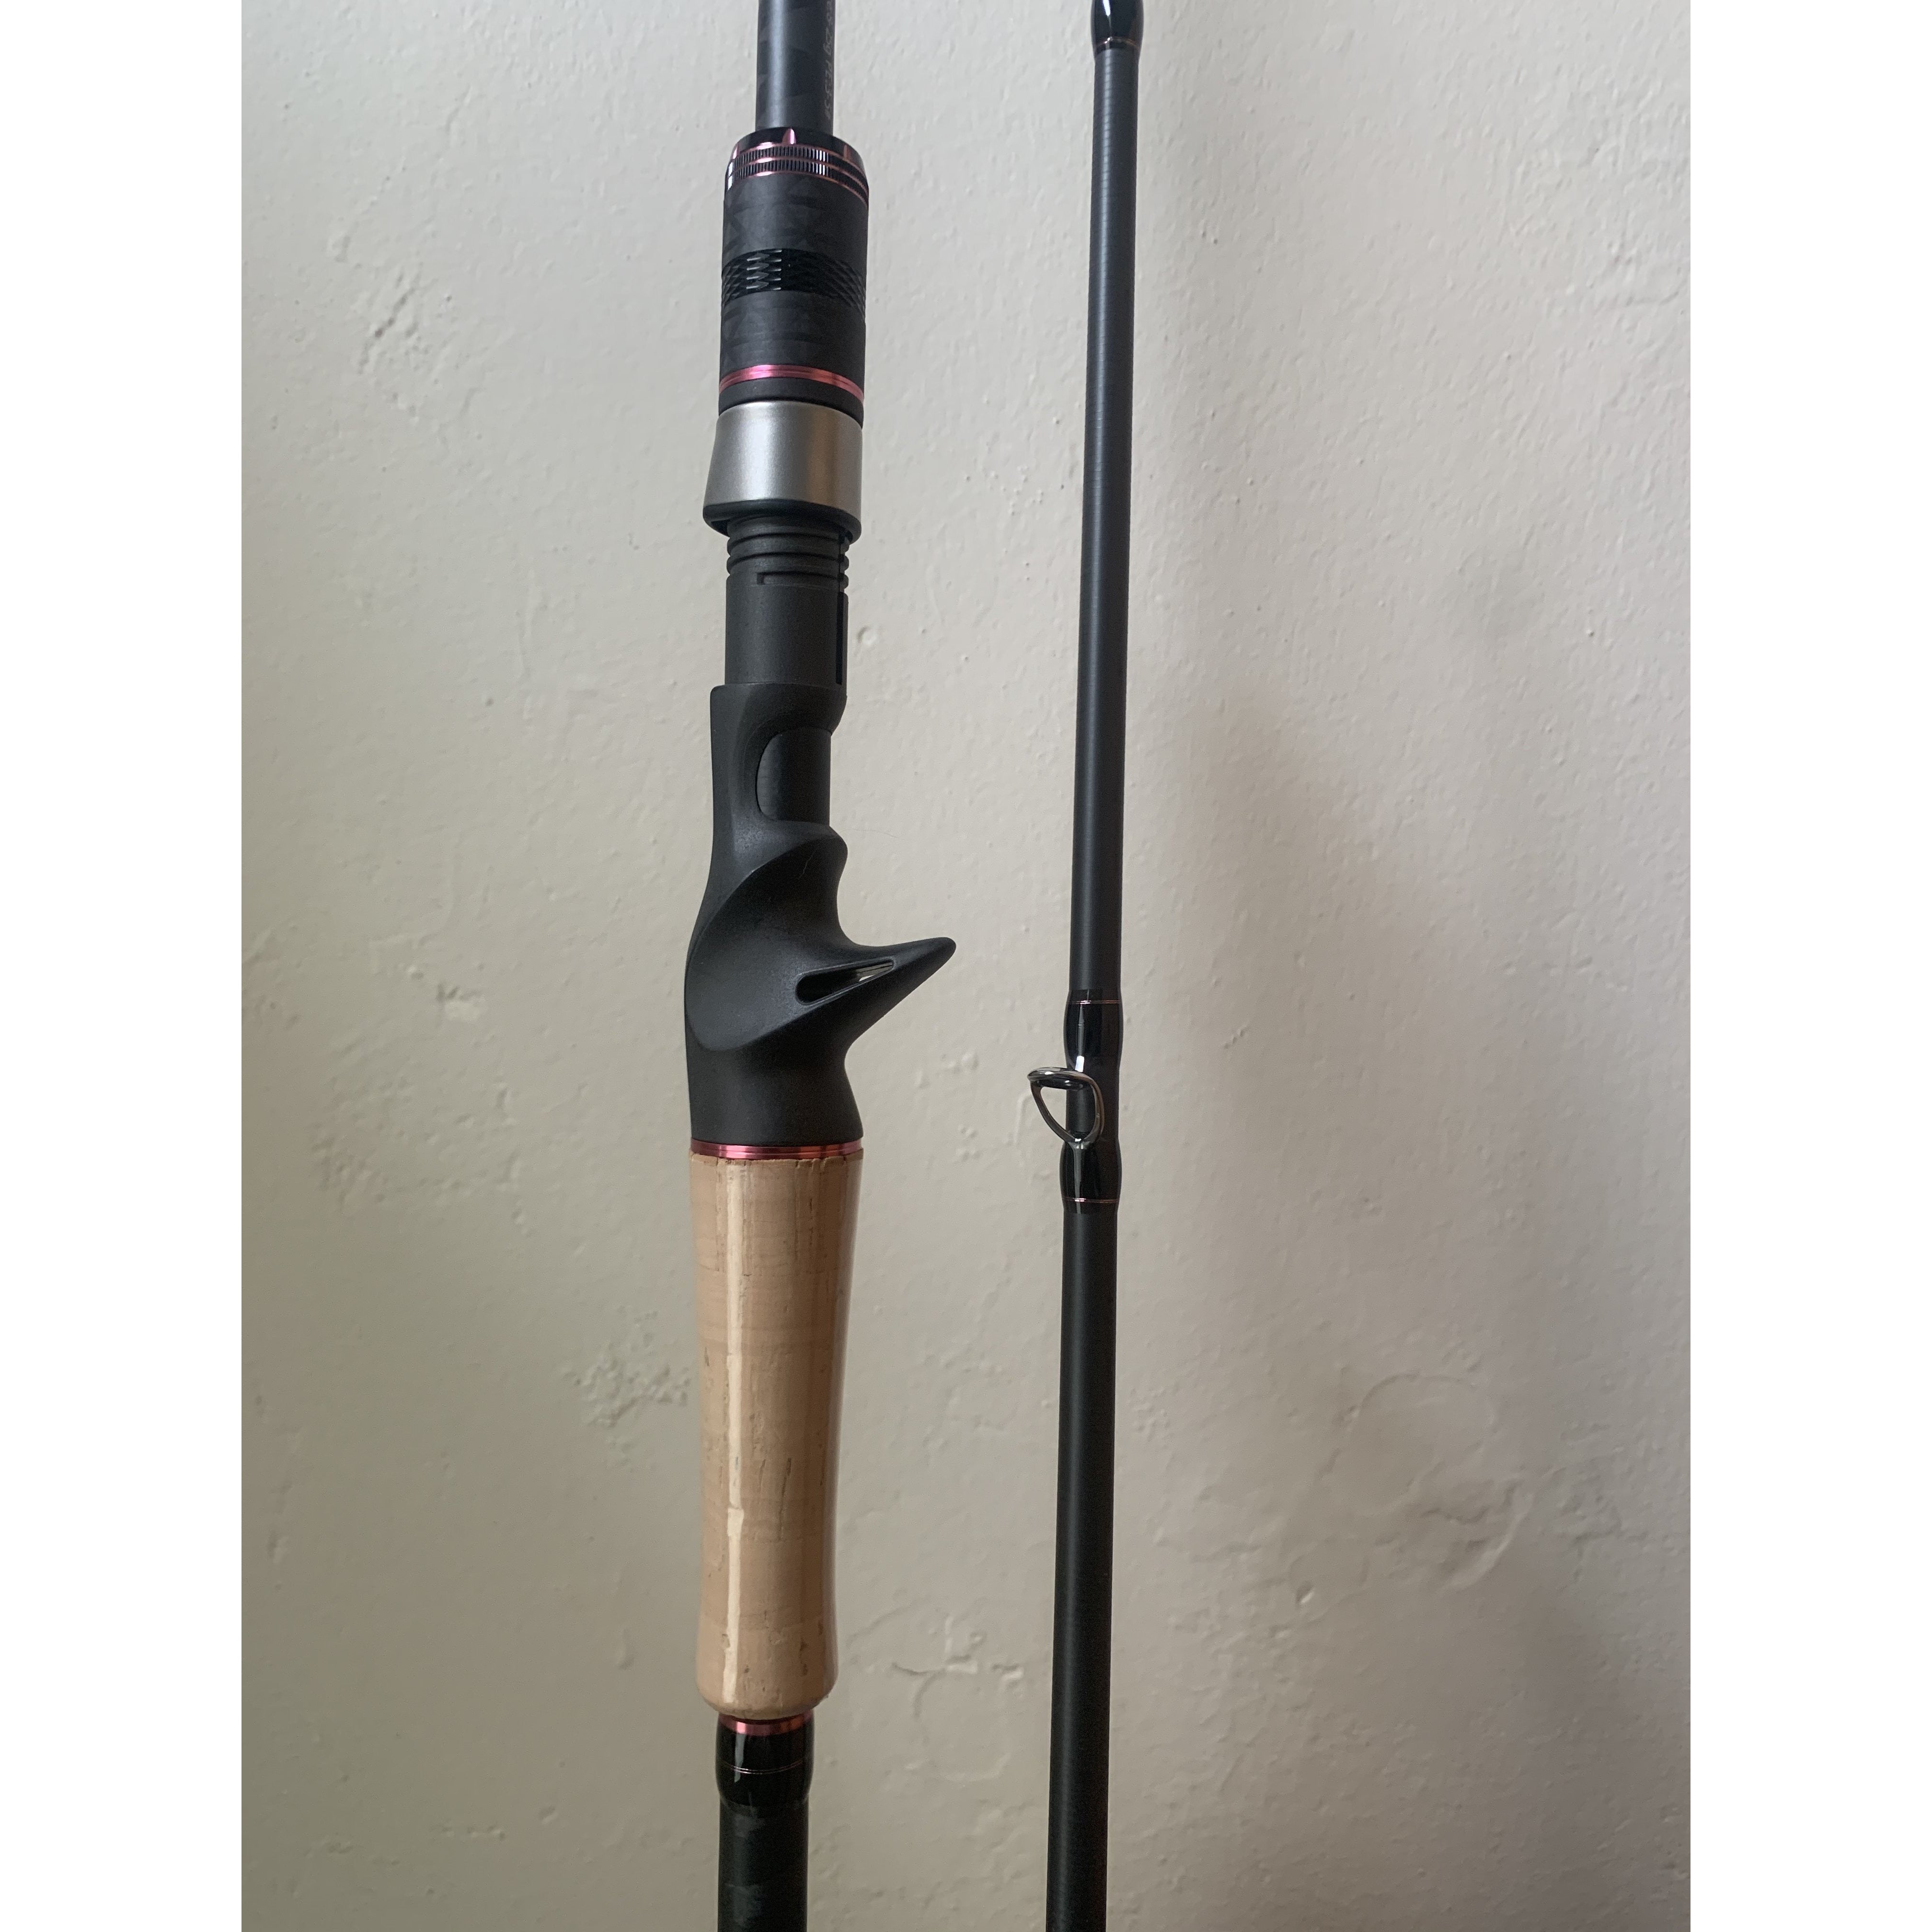 Fishing rod Crony K-2 Split Cork series